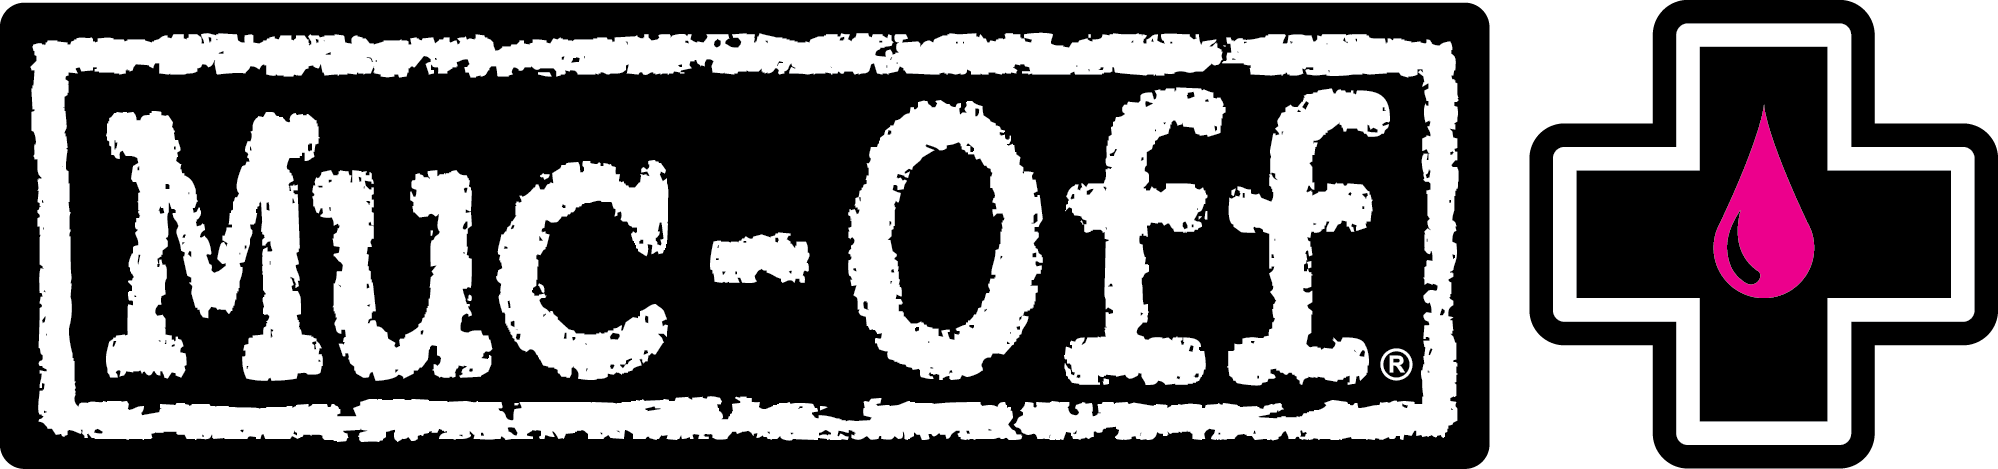 Muc-Off_logo_horizontal.png